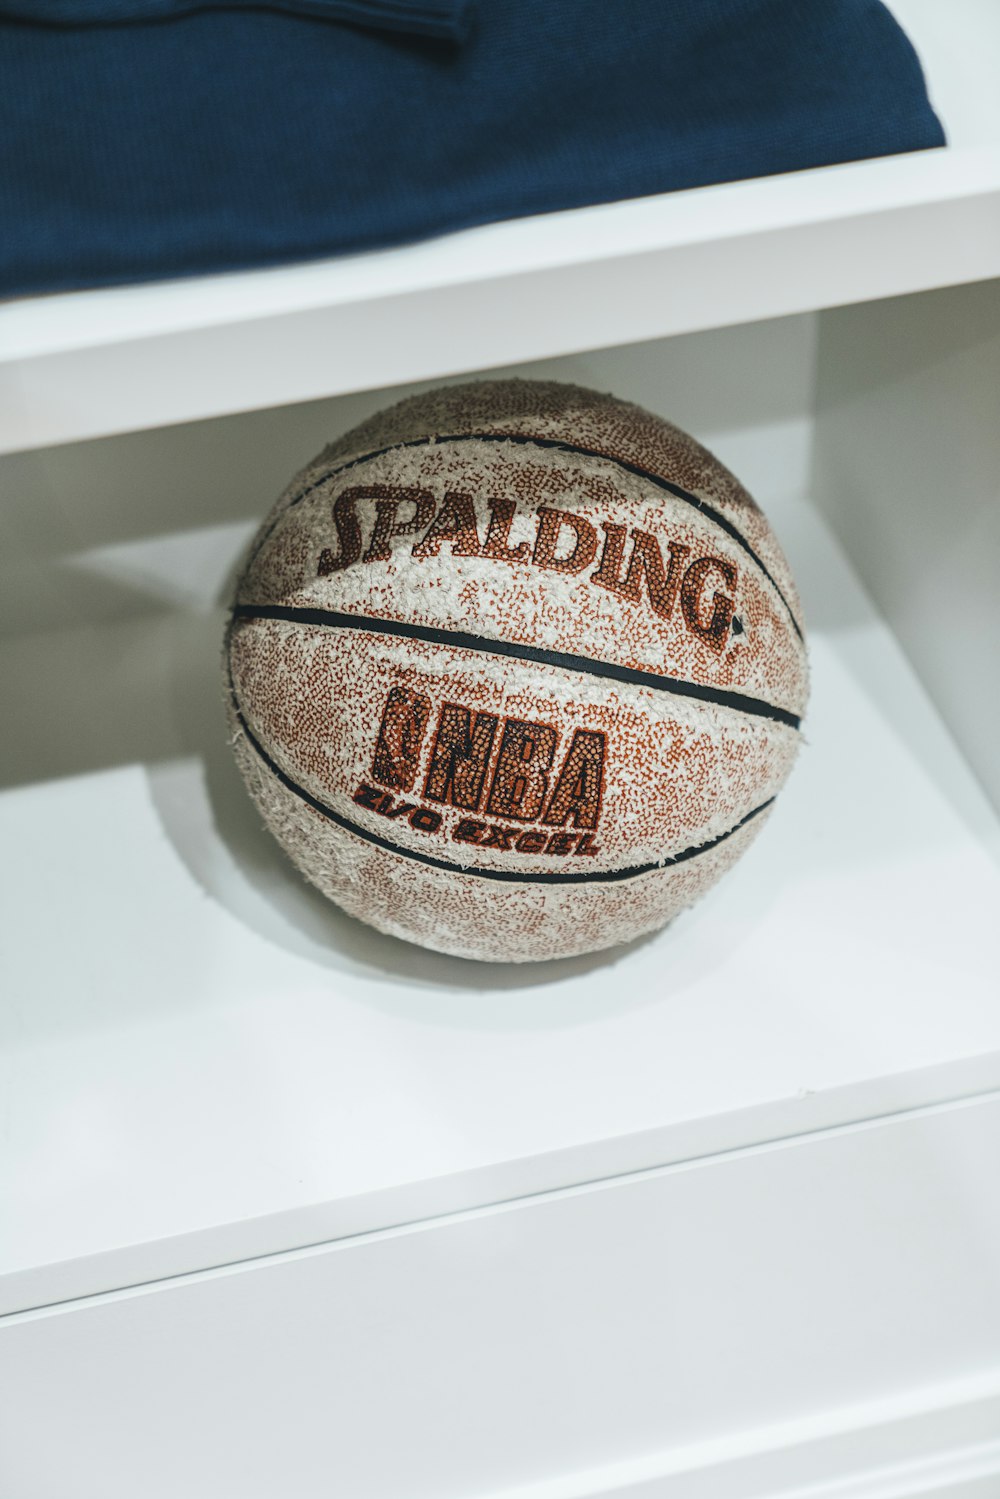 Spalding basketball in shelf